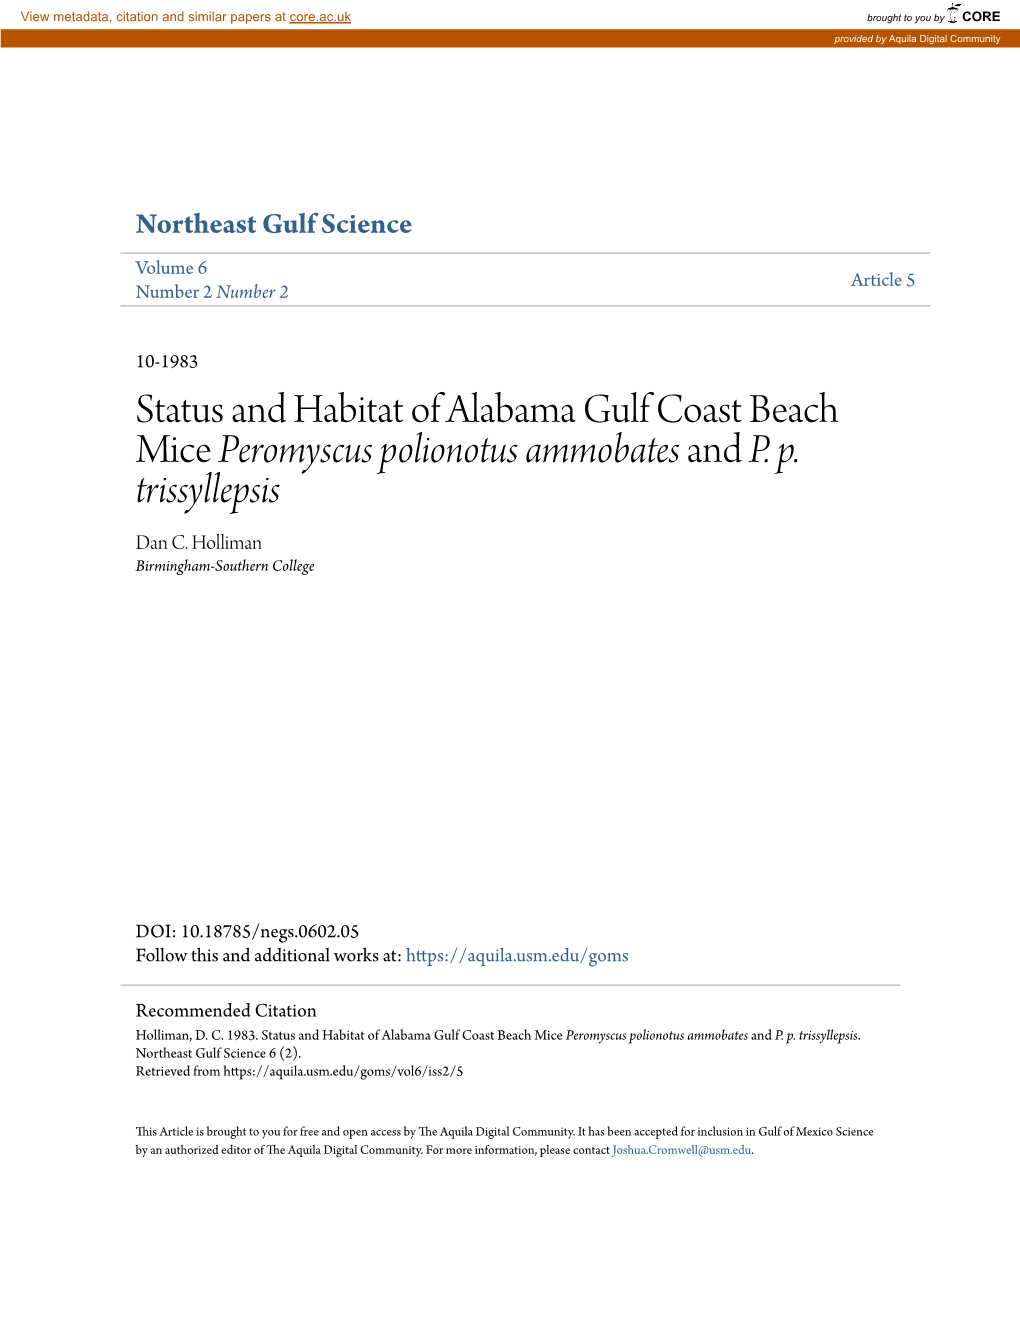 Status and Habitat of Alabama Gulf Coast Beach Mice Peromyscus Polionotus Ammobates and P